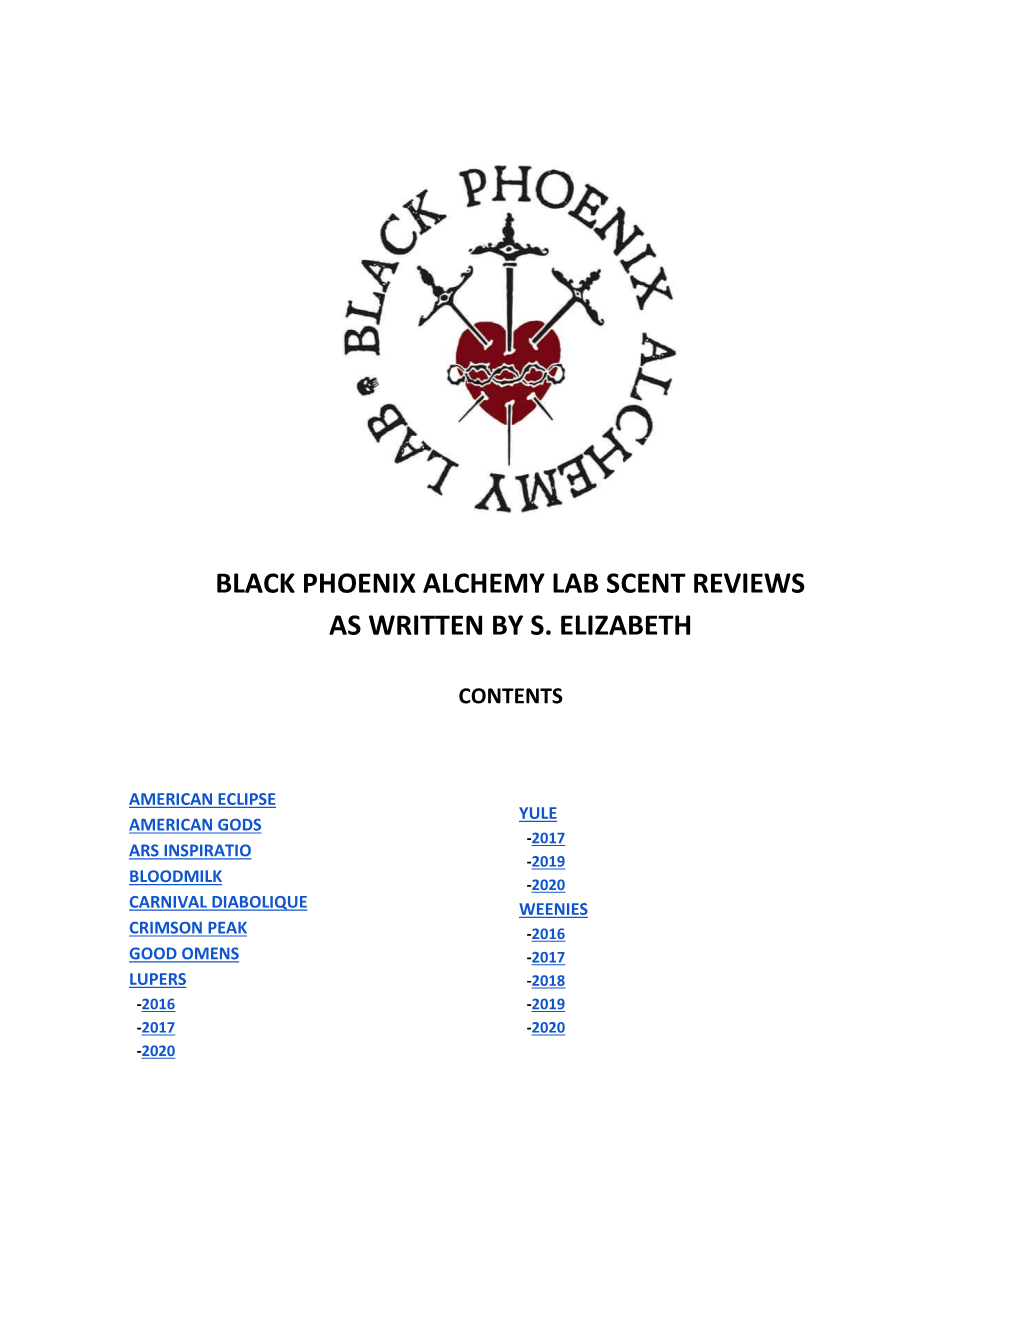 Black Phoenix Alchemy Lab Scent Reviews As Written by S. Elizabeth